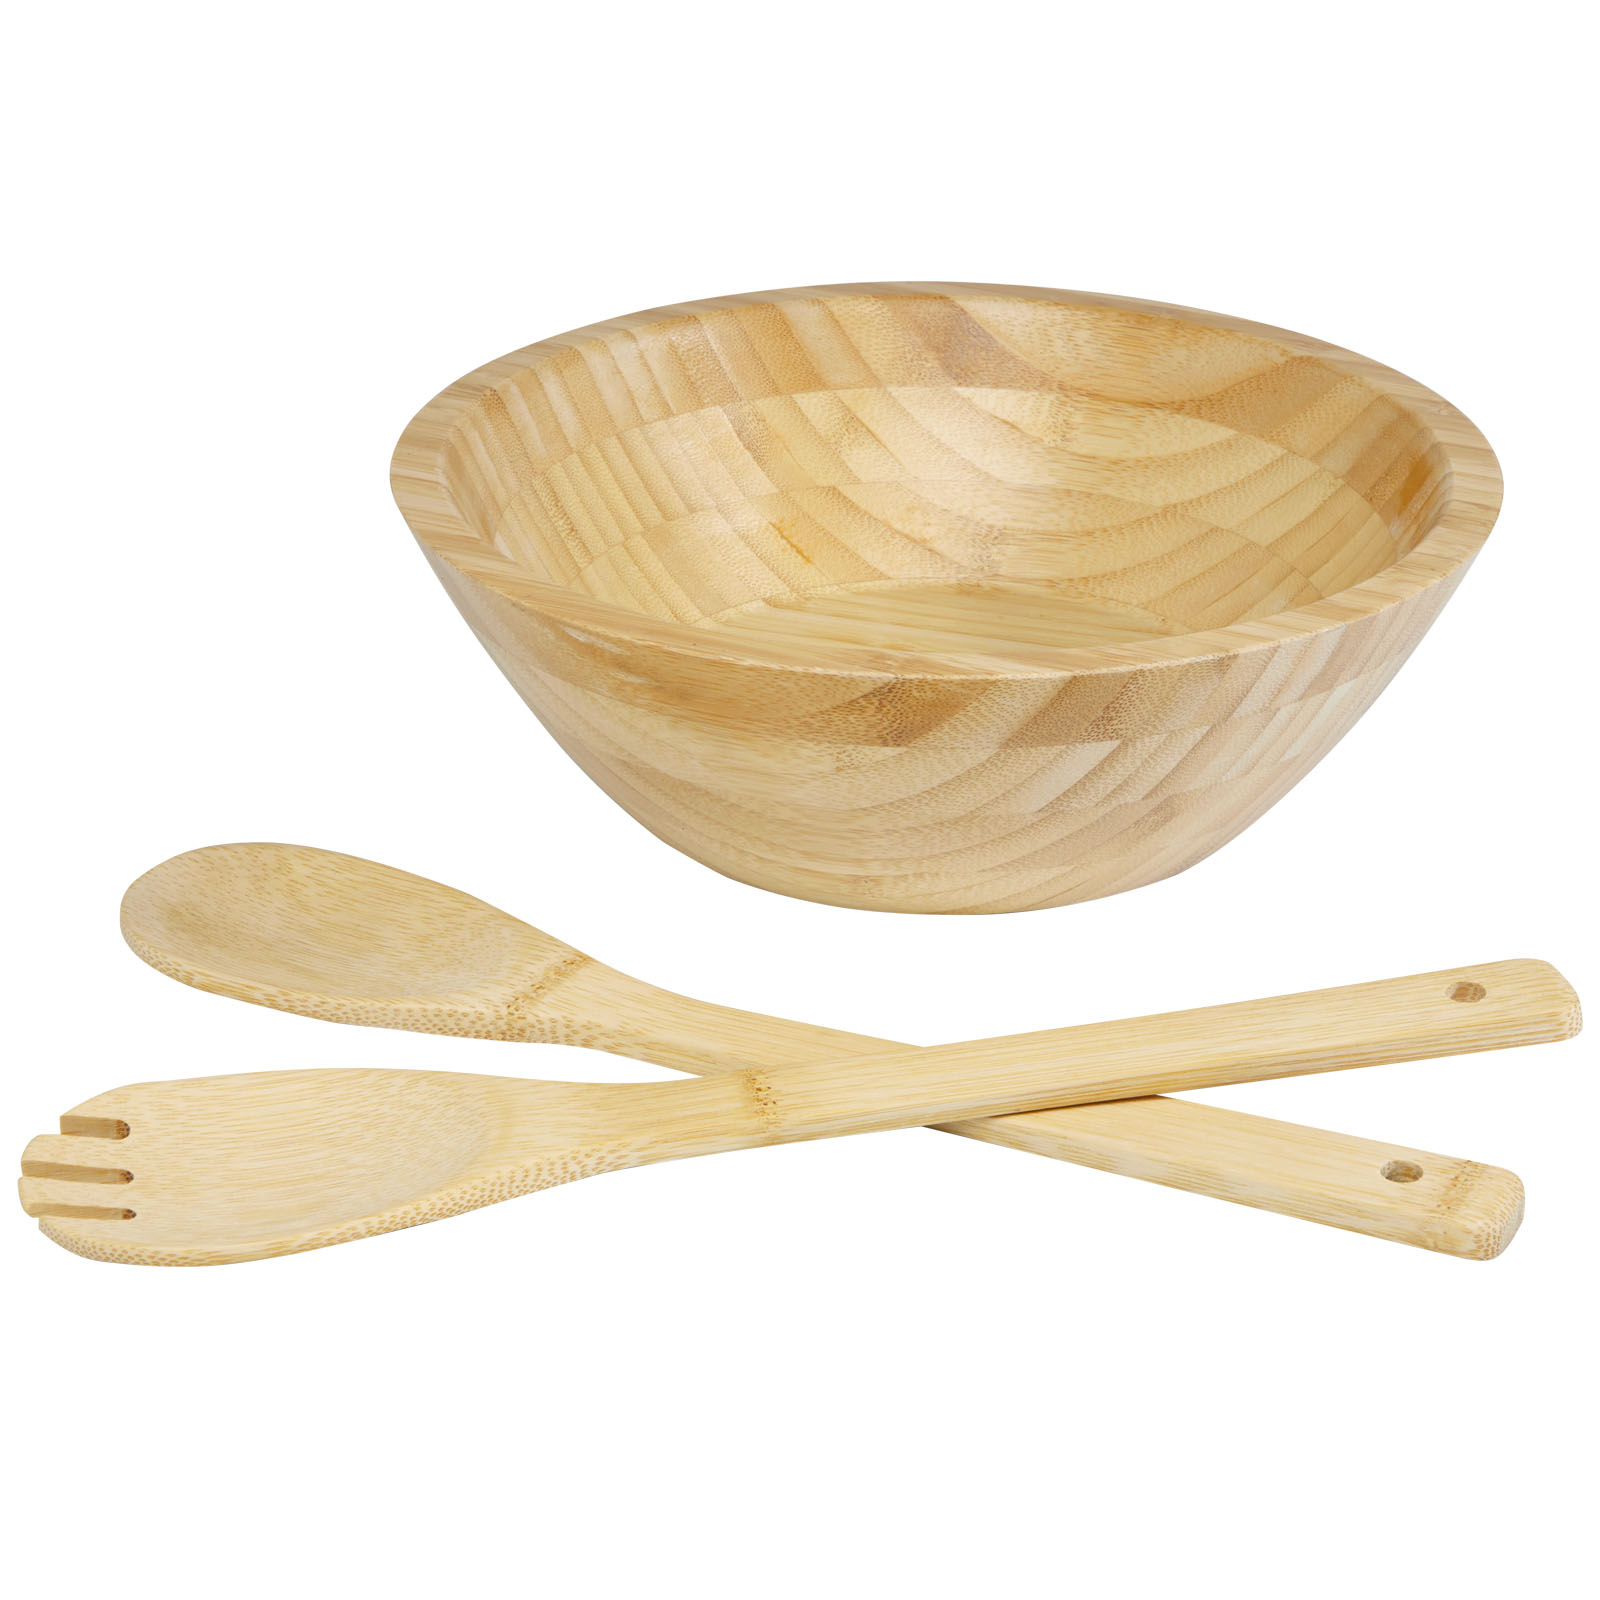 Advertising Kitchenware - Argulls bamboo salad bowl and tools